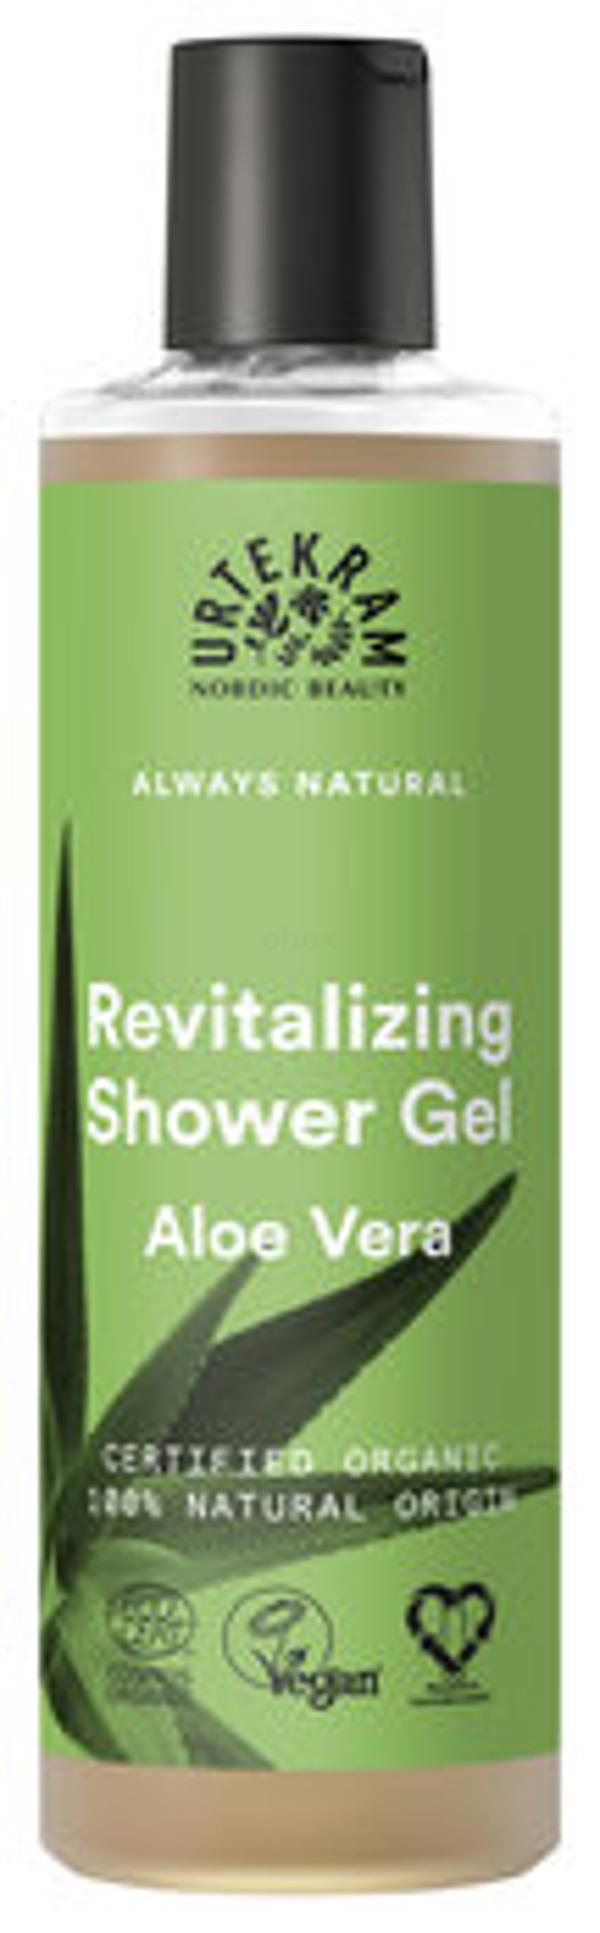 Produktfoto zu Revitalizing Shower Gel Aloe Vera